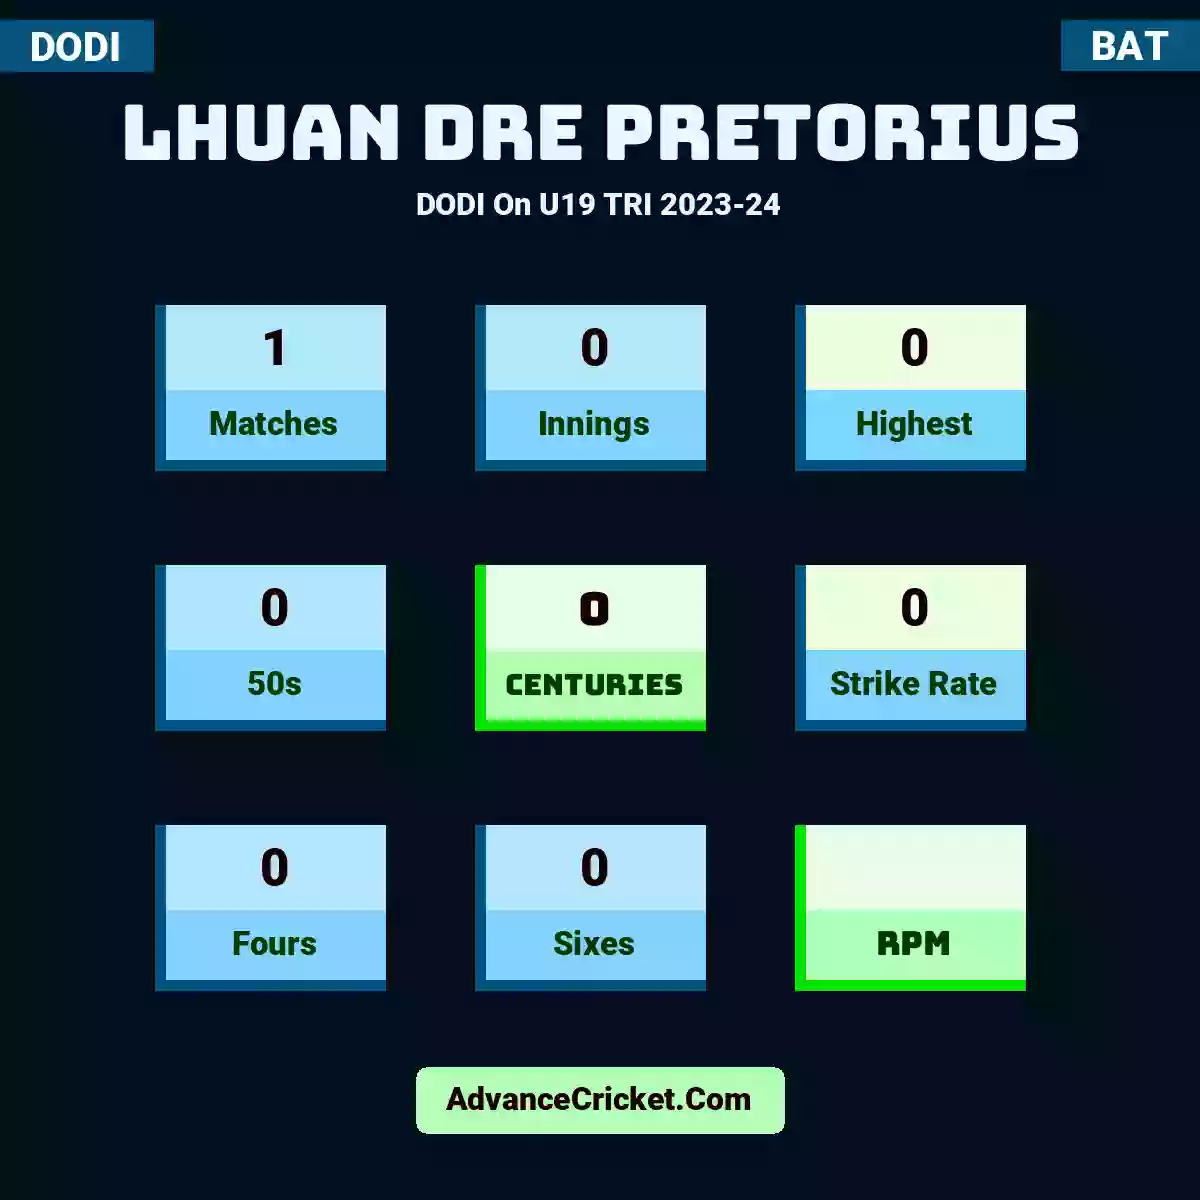 Lhuan dre Pretorius DODI  On U19 TRI 2023-24, Lhuan dre Pretorius played 1 matches, scored 0 runs as highest, 0 half-centuries, and 0 centuries, with a strike rate of 0. L.Pretorius hit 0 fours and 0 sixes.